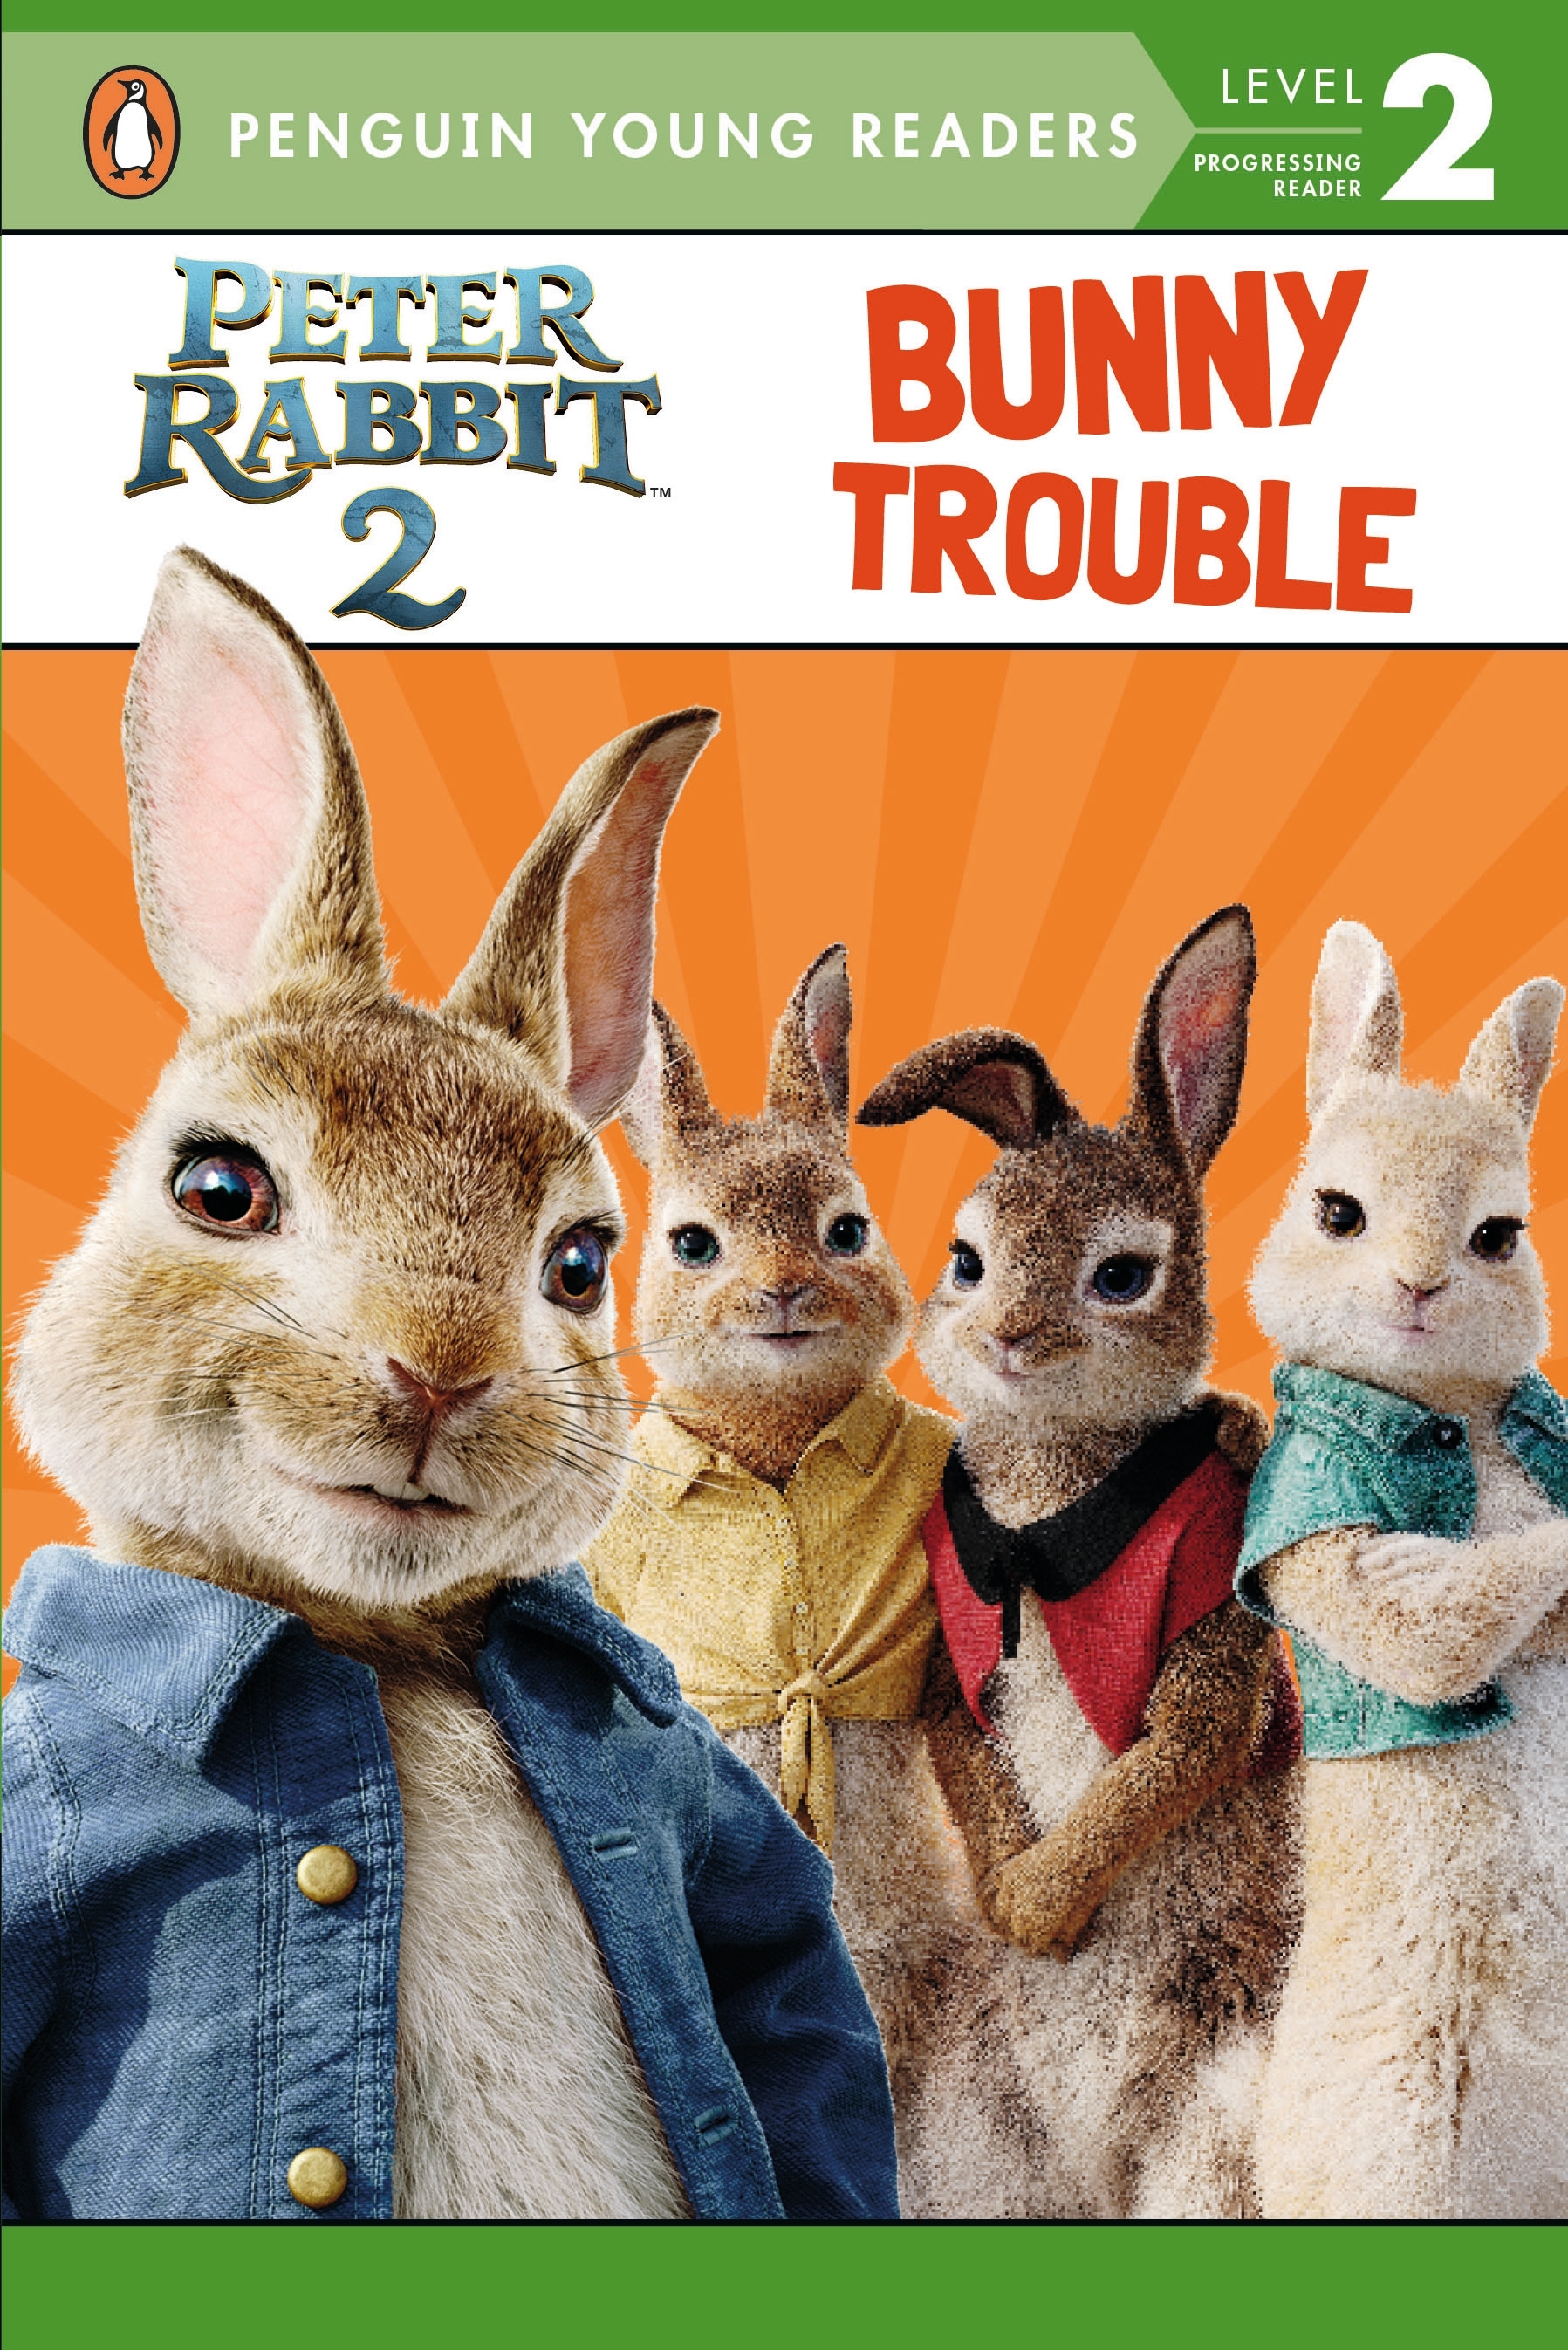 Peter Rabbit 2: Bunny Trouble - Penguin Books Australia